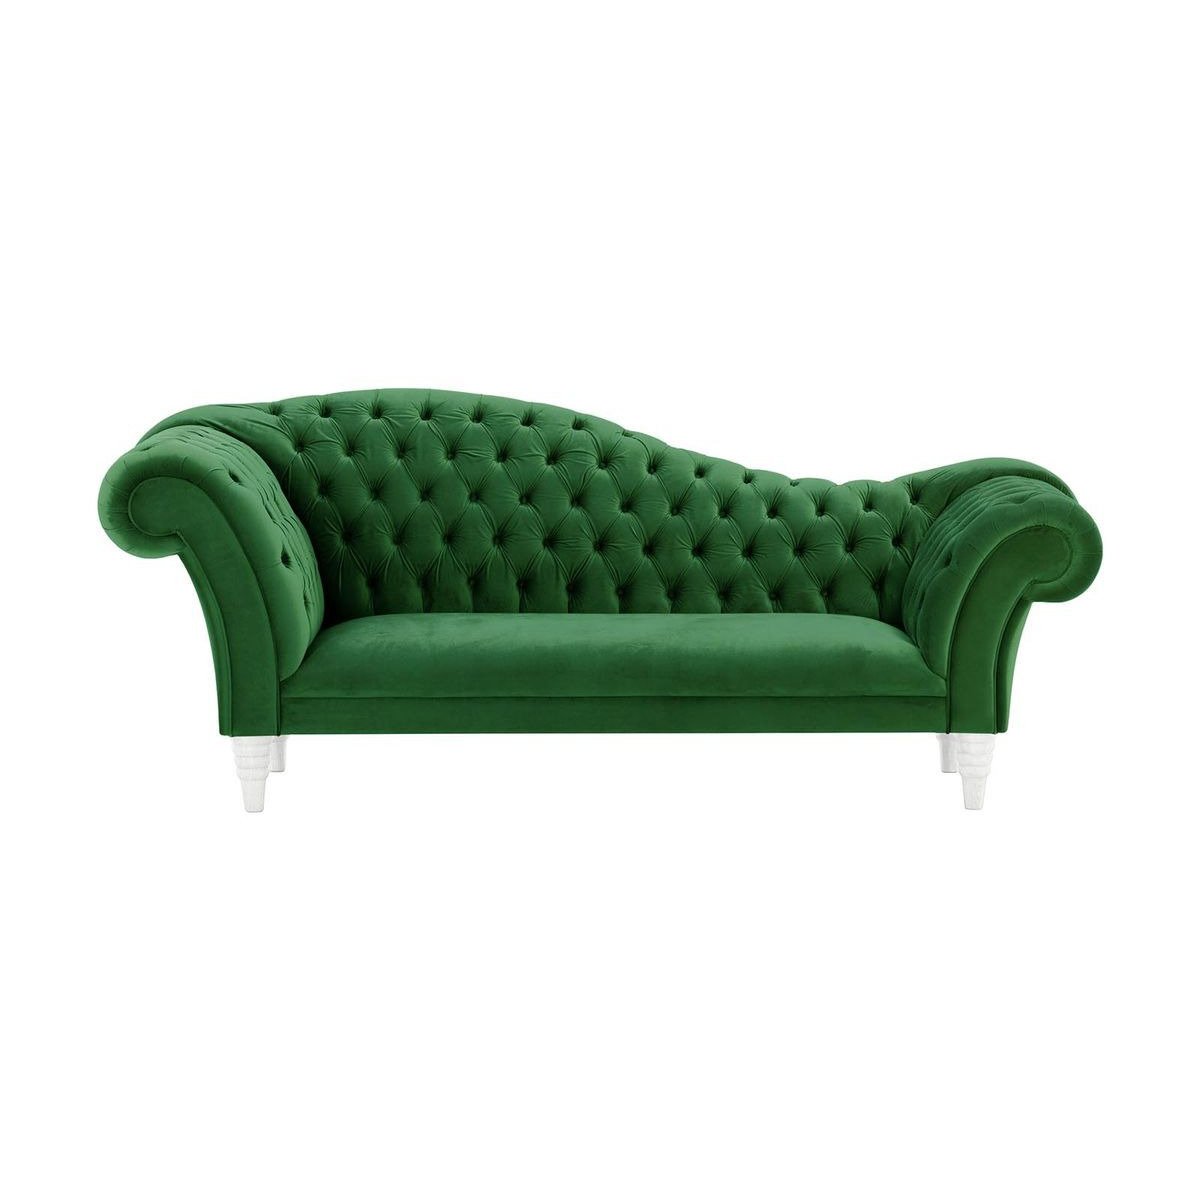 Chester Chaise Lounge Sofa, dark green, Leg colour: white - image 1